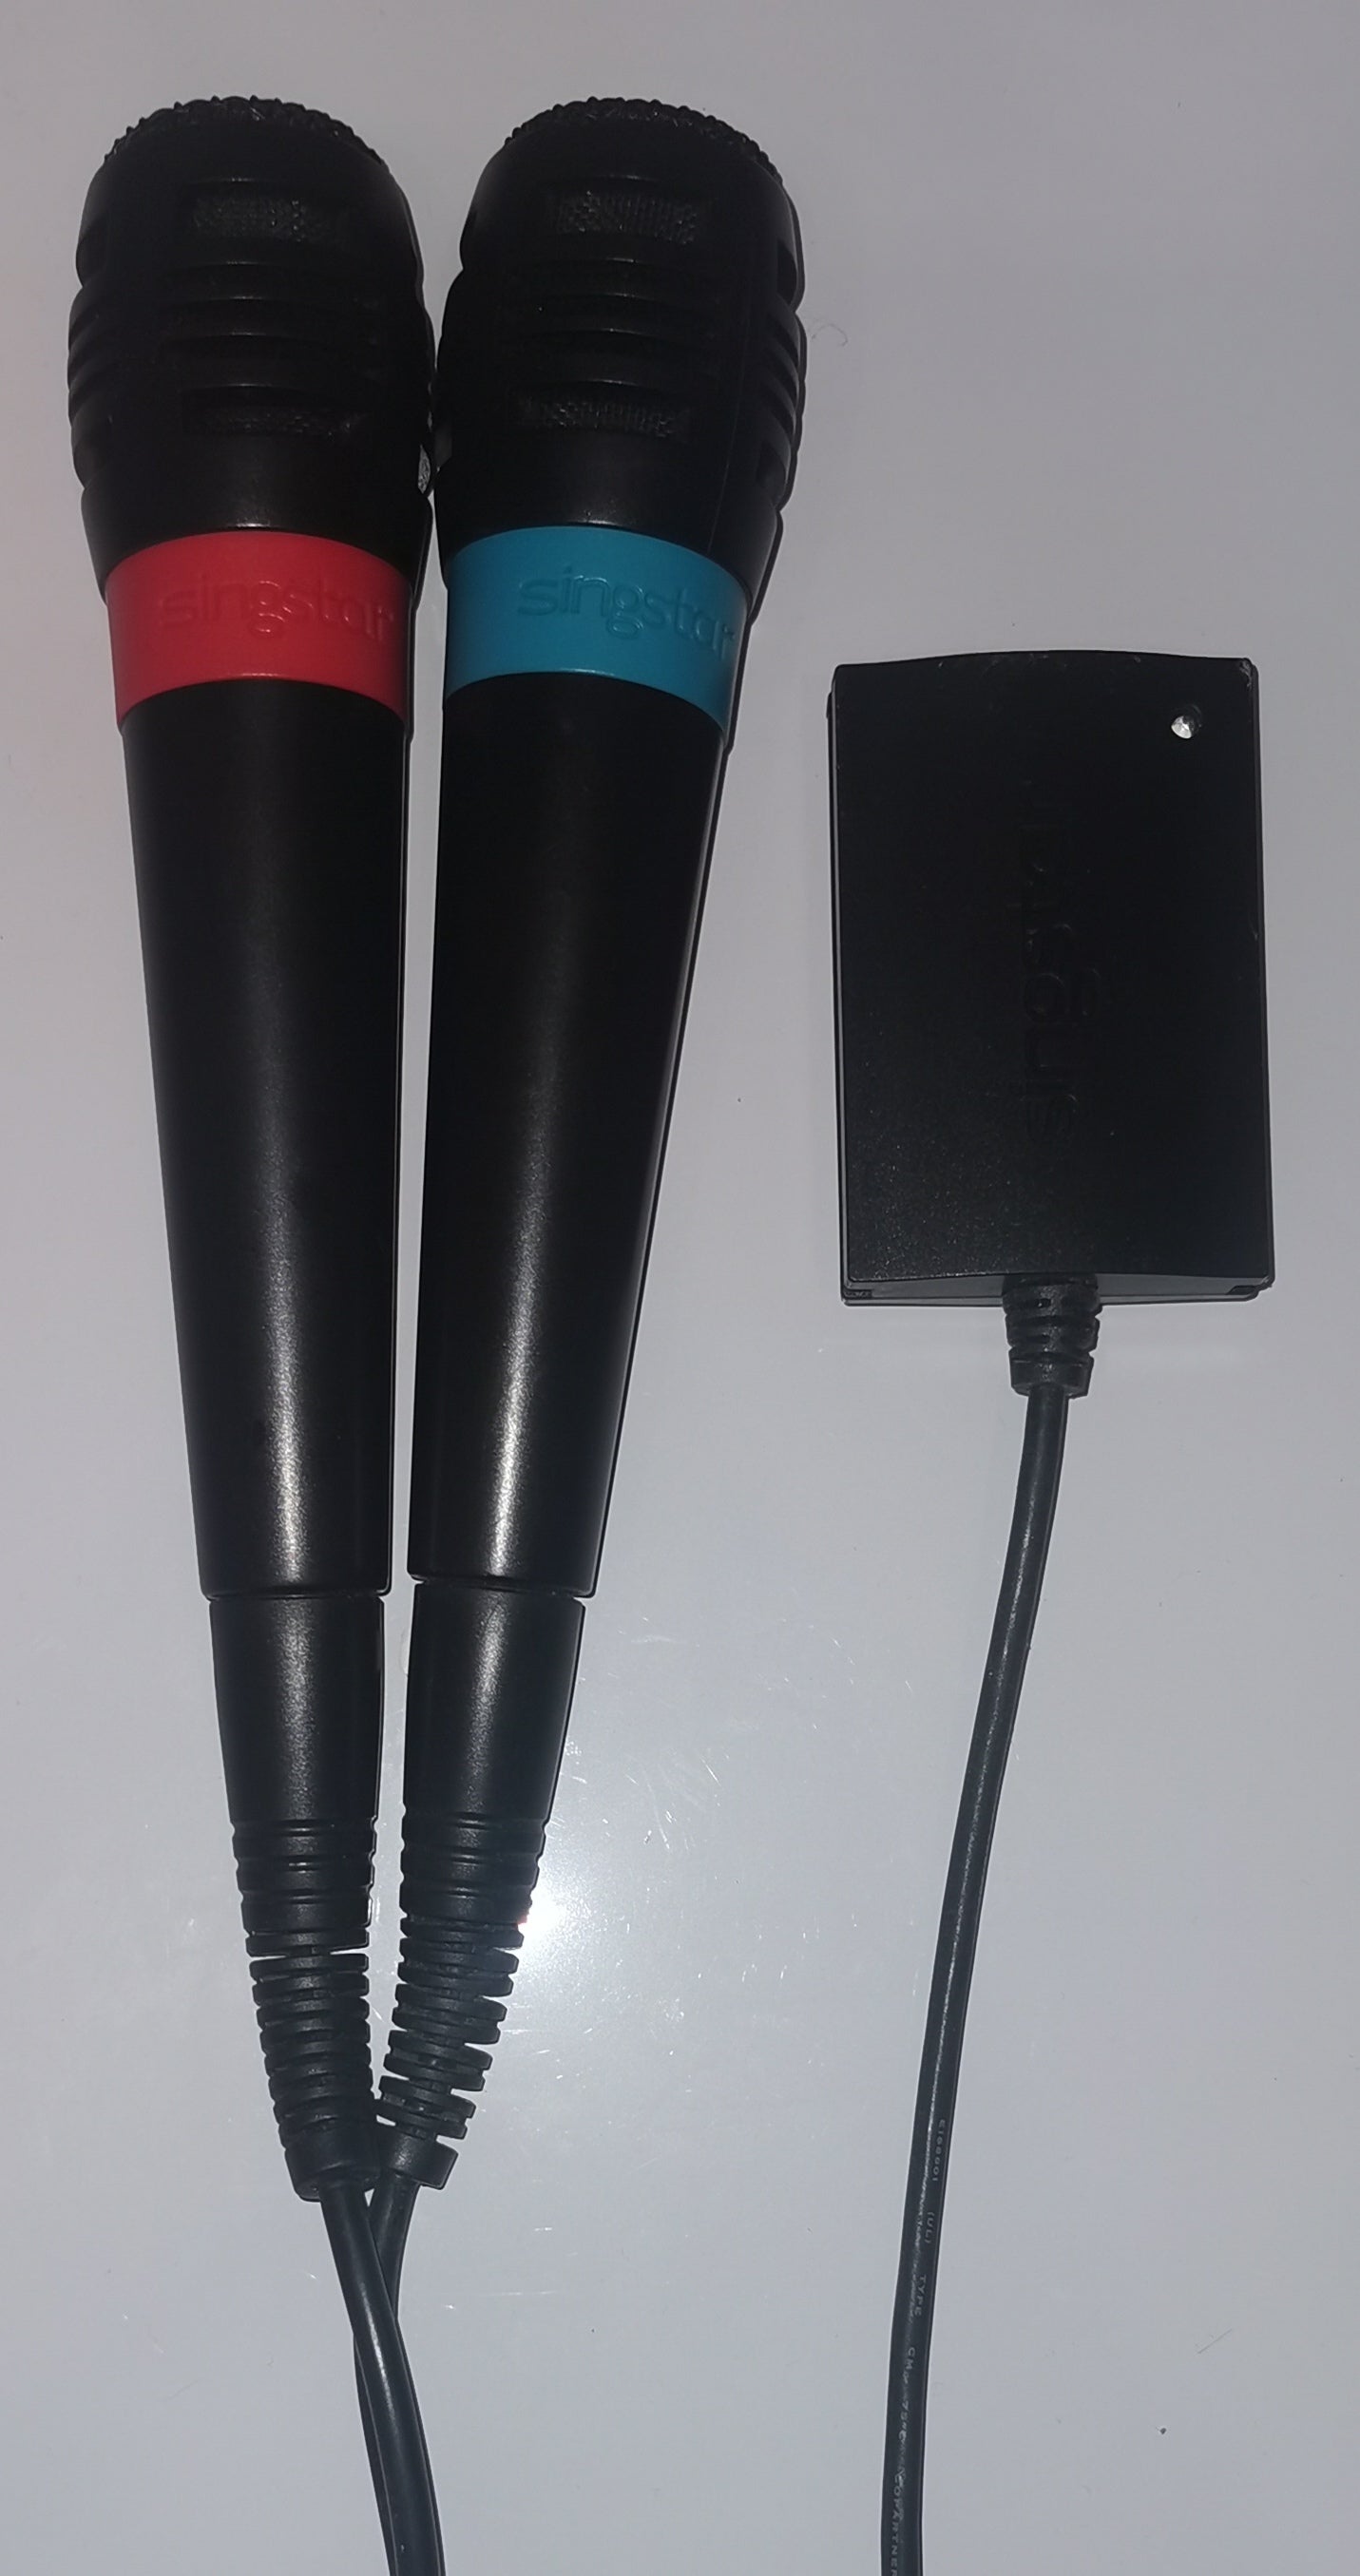 SingStar Original USB Mikrofone Doppelpack fuer PlayStation 2 und 3 [Gut]